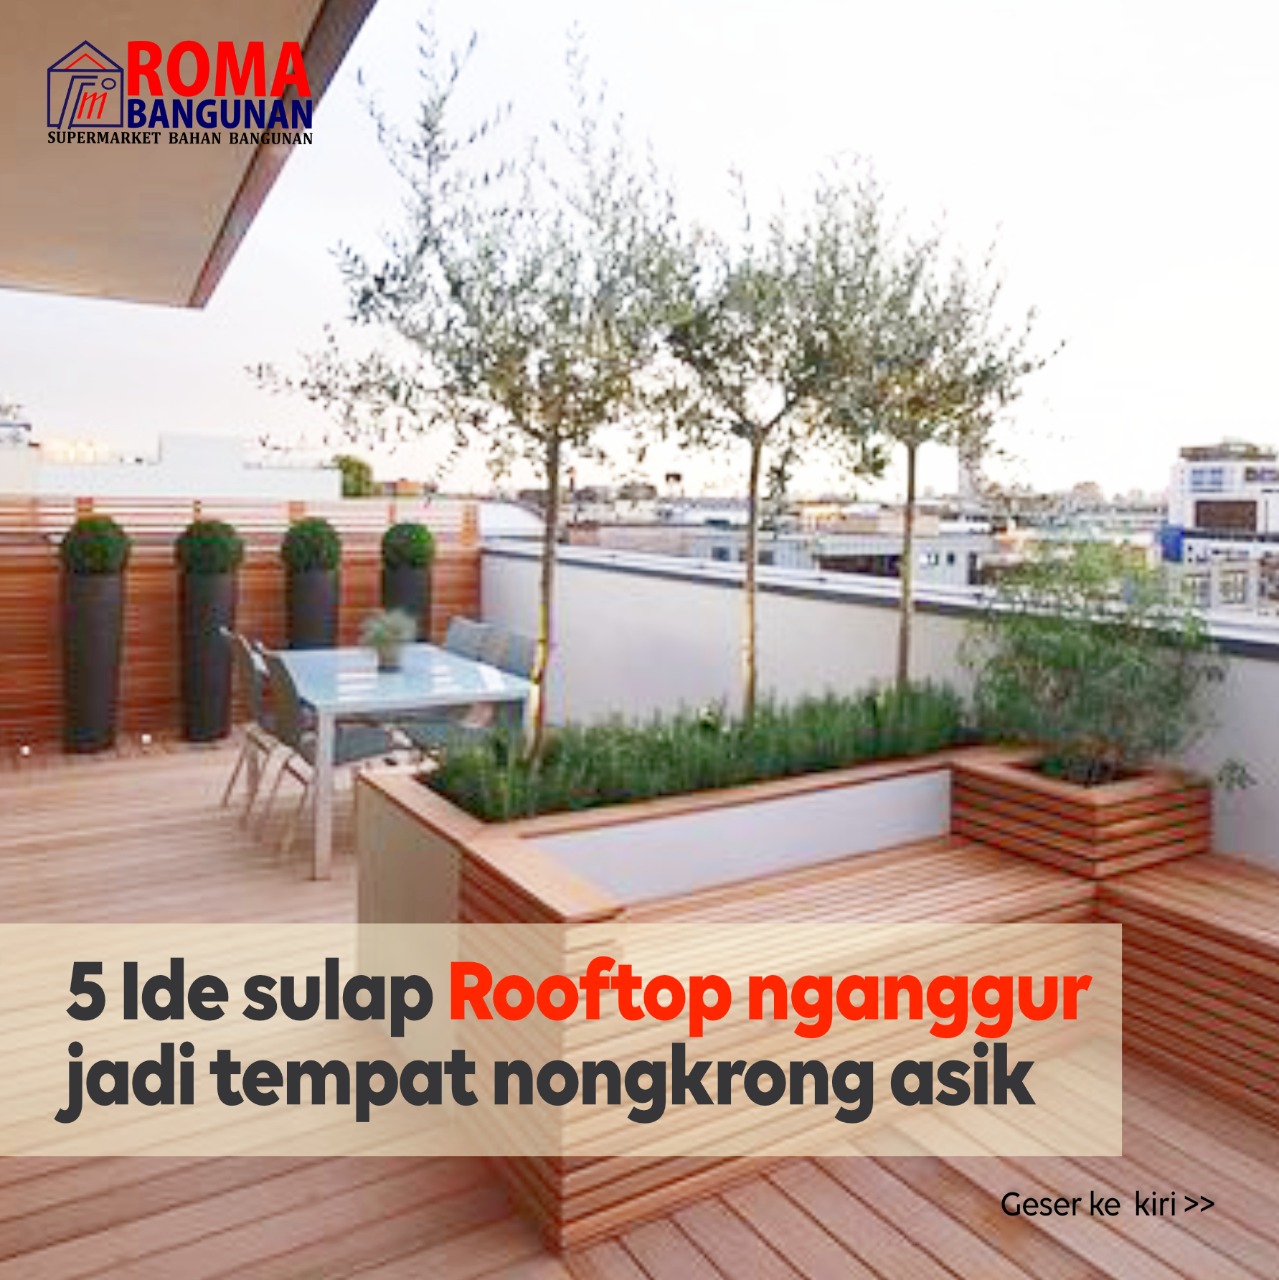 You are currently viewing Manfaatkan Area Rooftop Jadi Tempat Nongkrong Asik